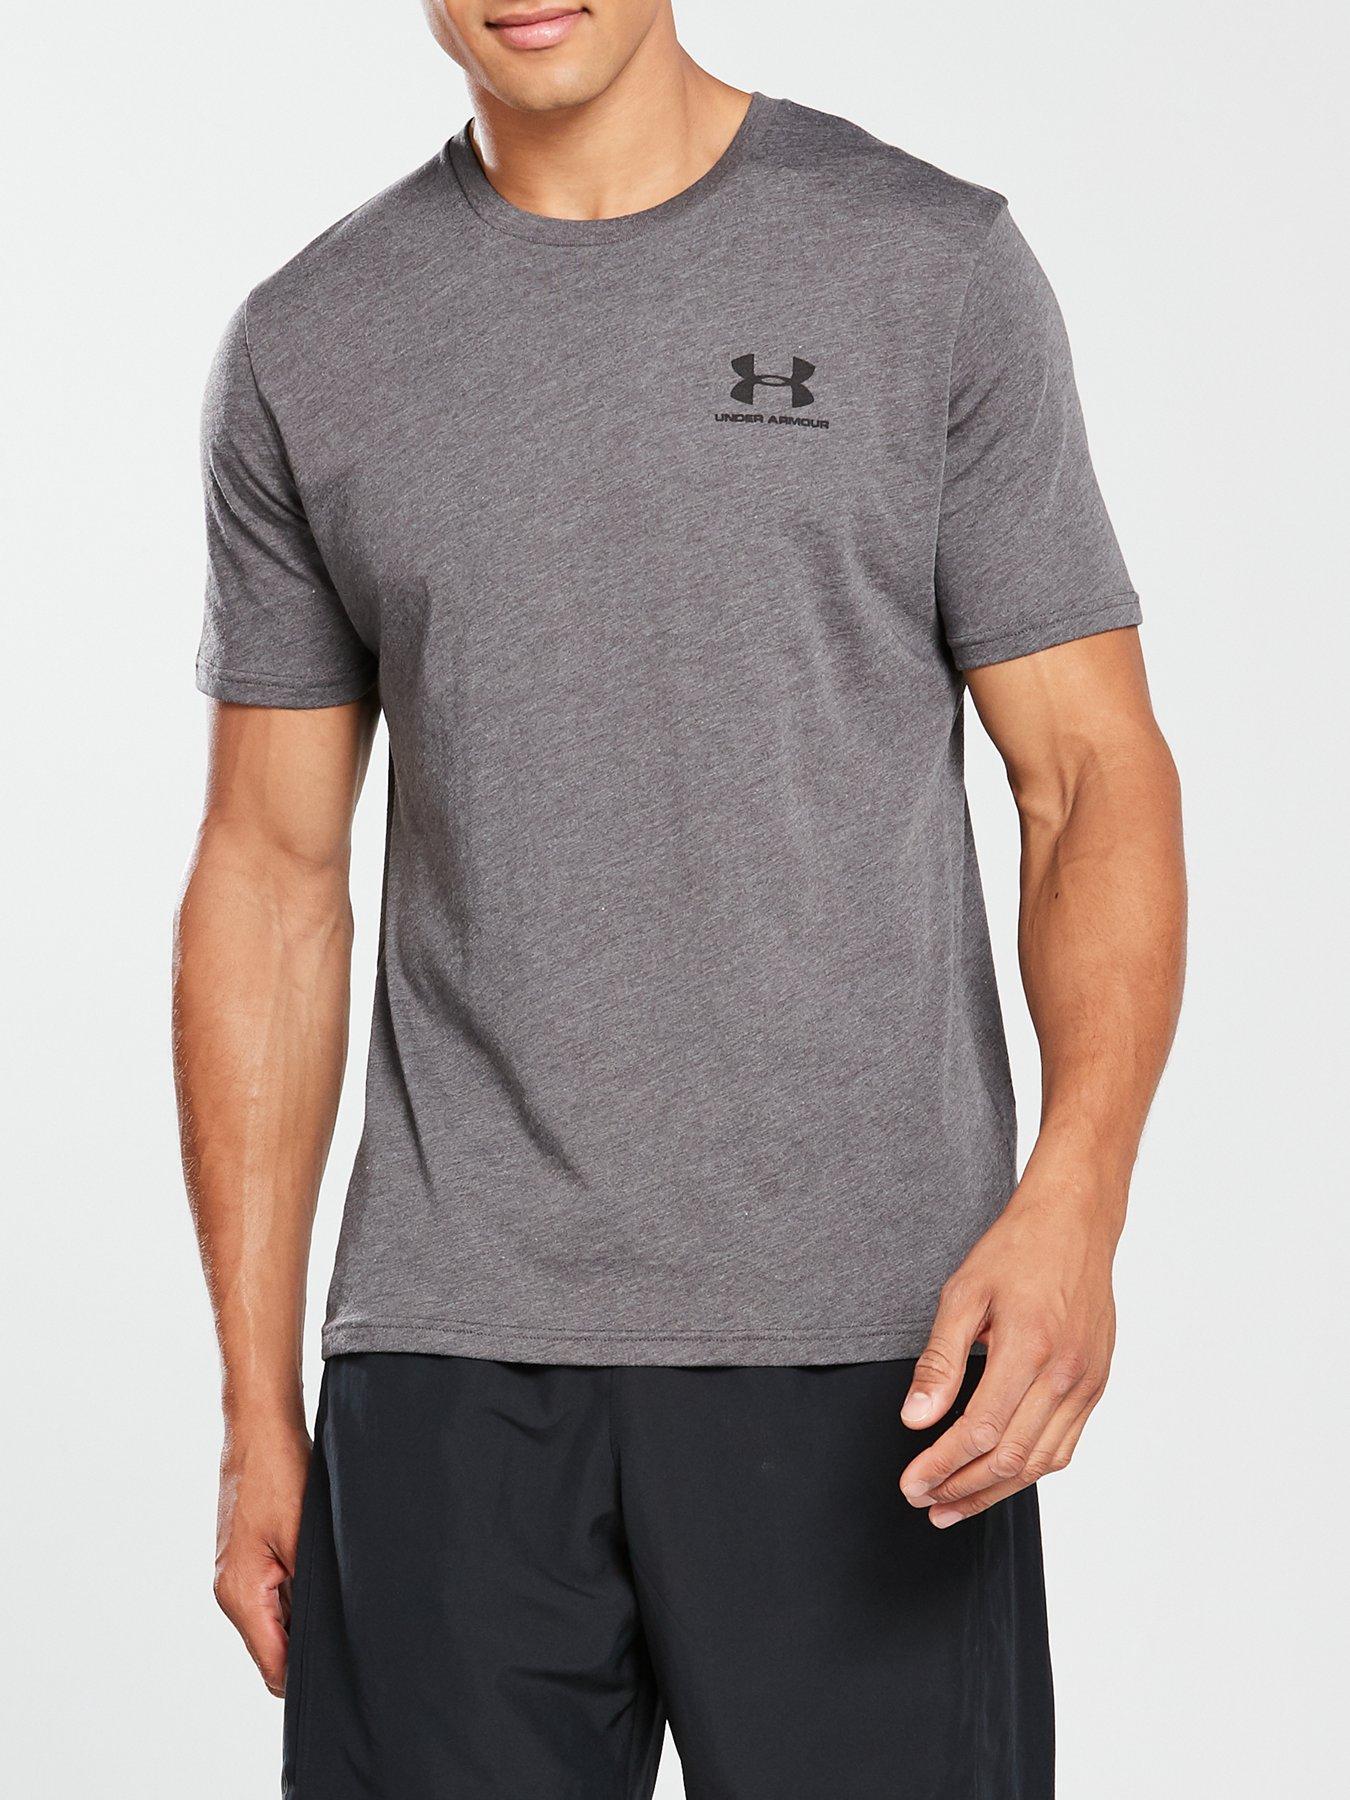 Mens Sports T Shirts | Mens Sports T Shirts at Very.co.uk